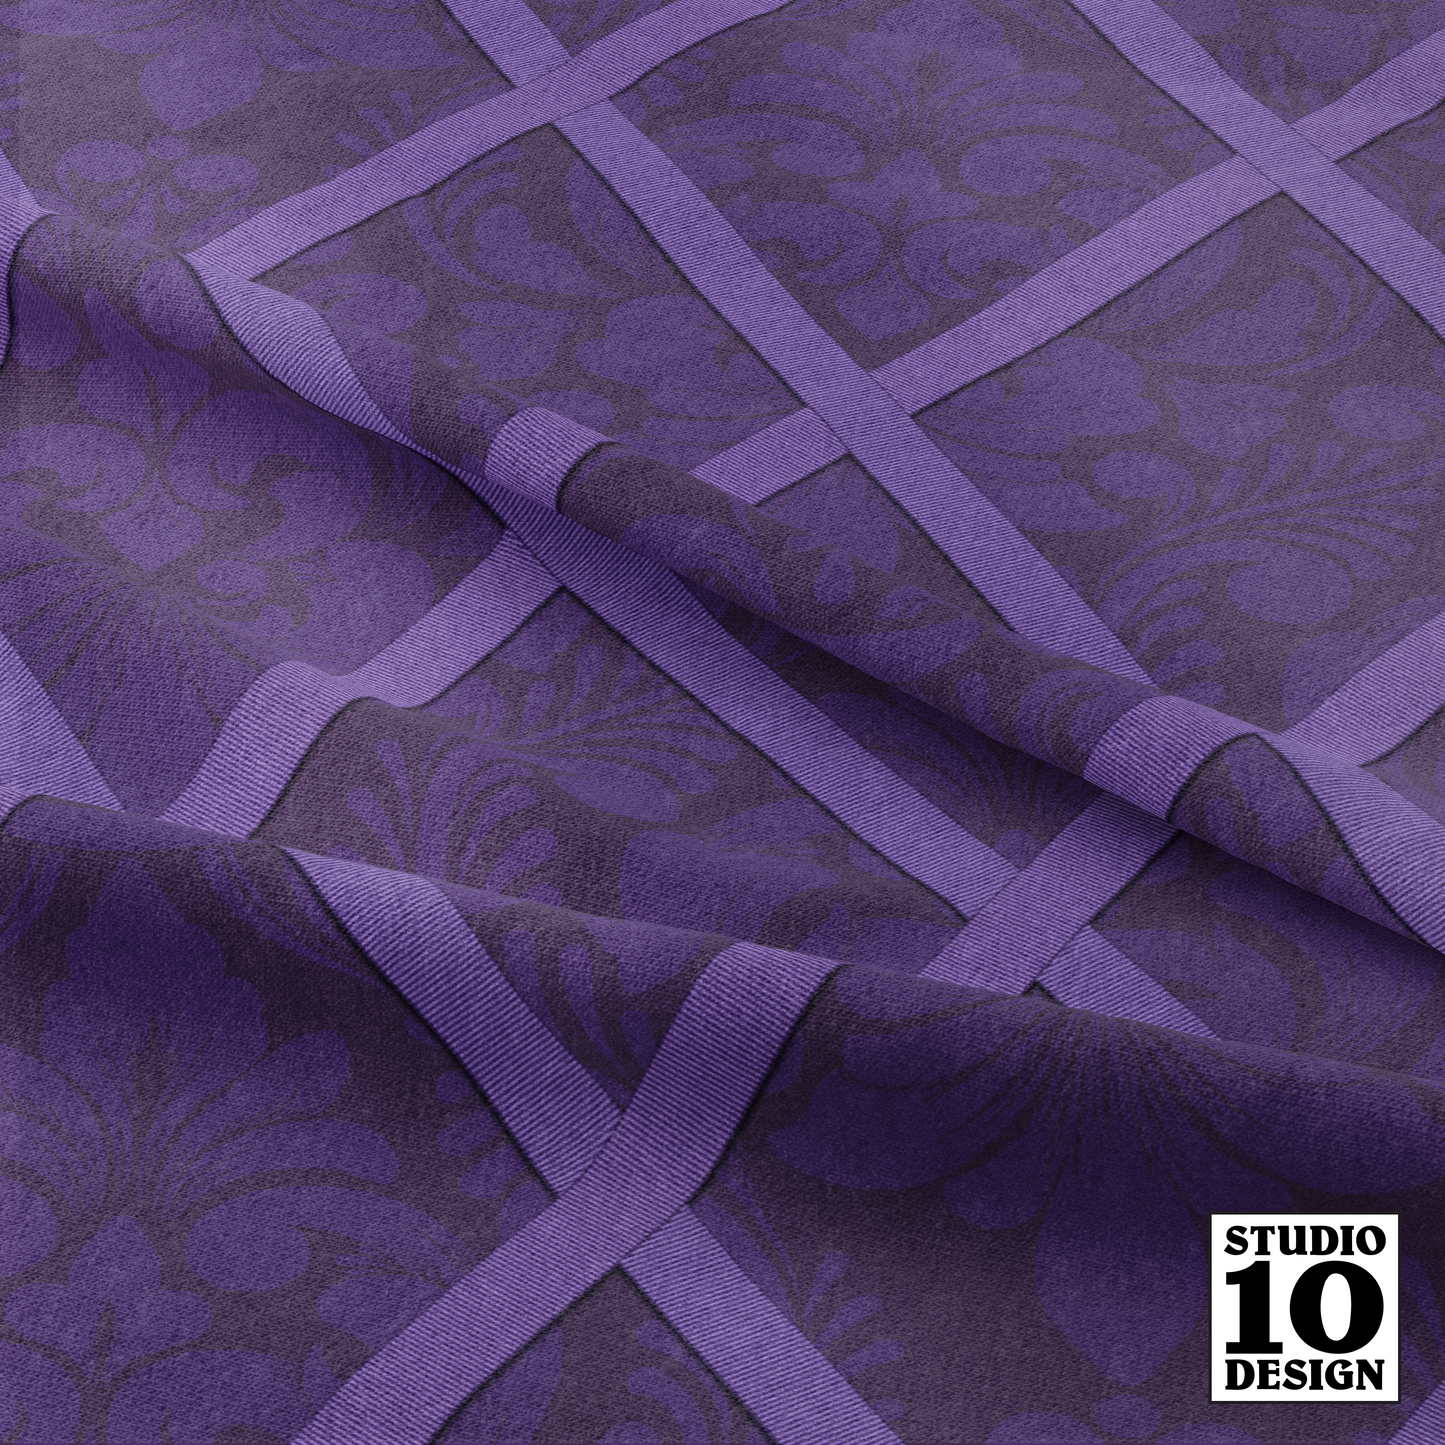 Plum Ribbon Damask Printed Fabric by Studio Ten Design